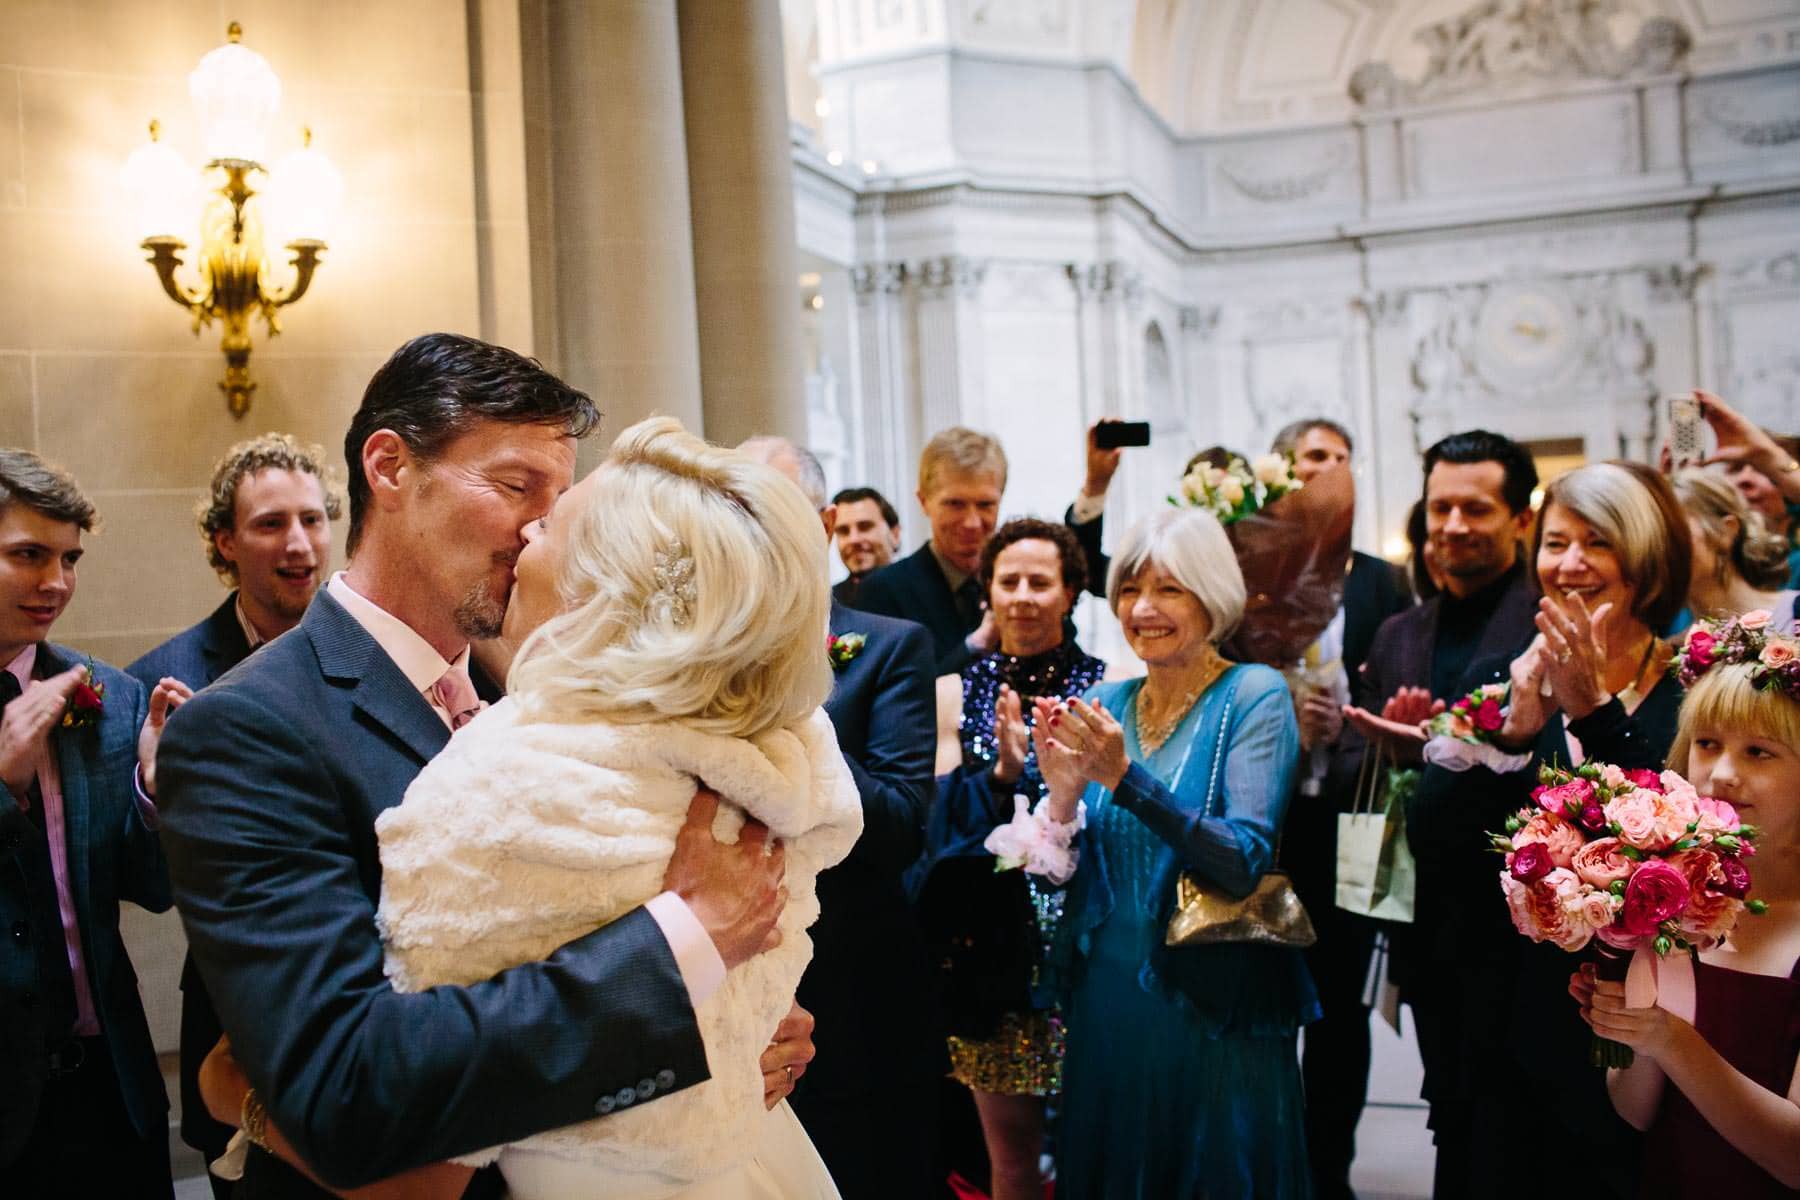 emotional wedding ceremony in the rotunda at San Francisco City Hall